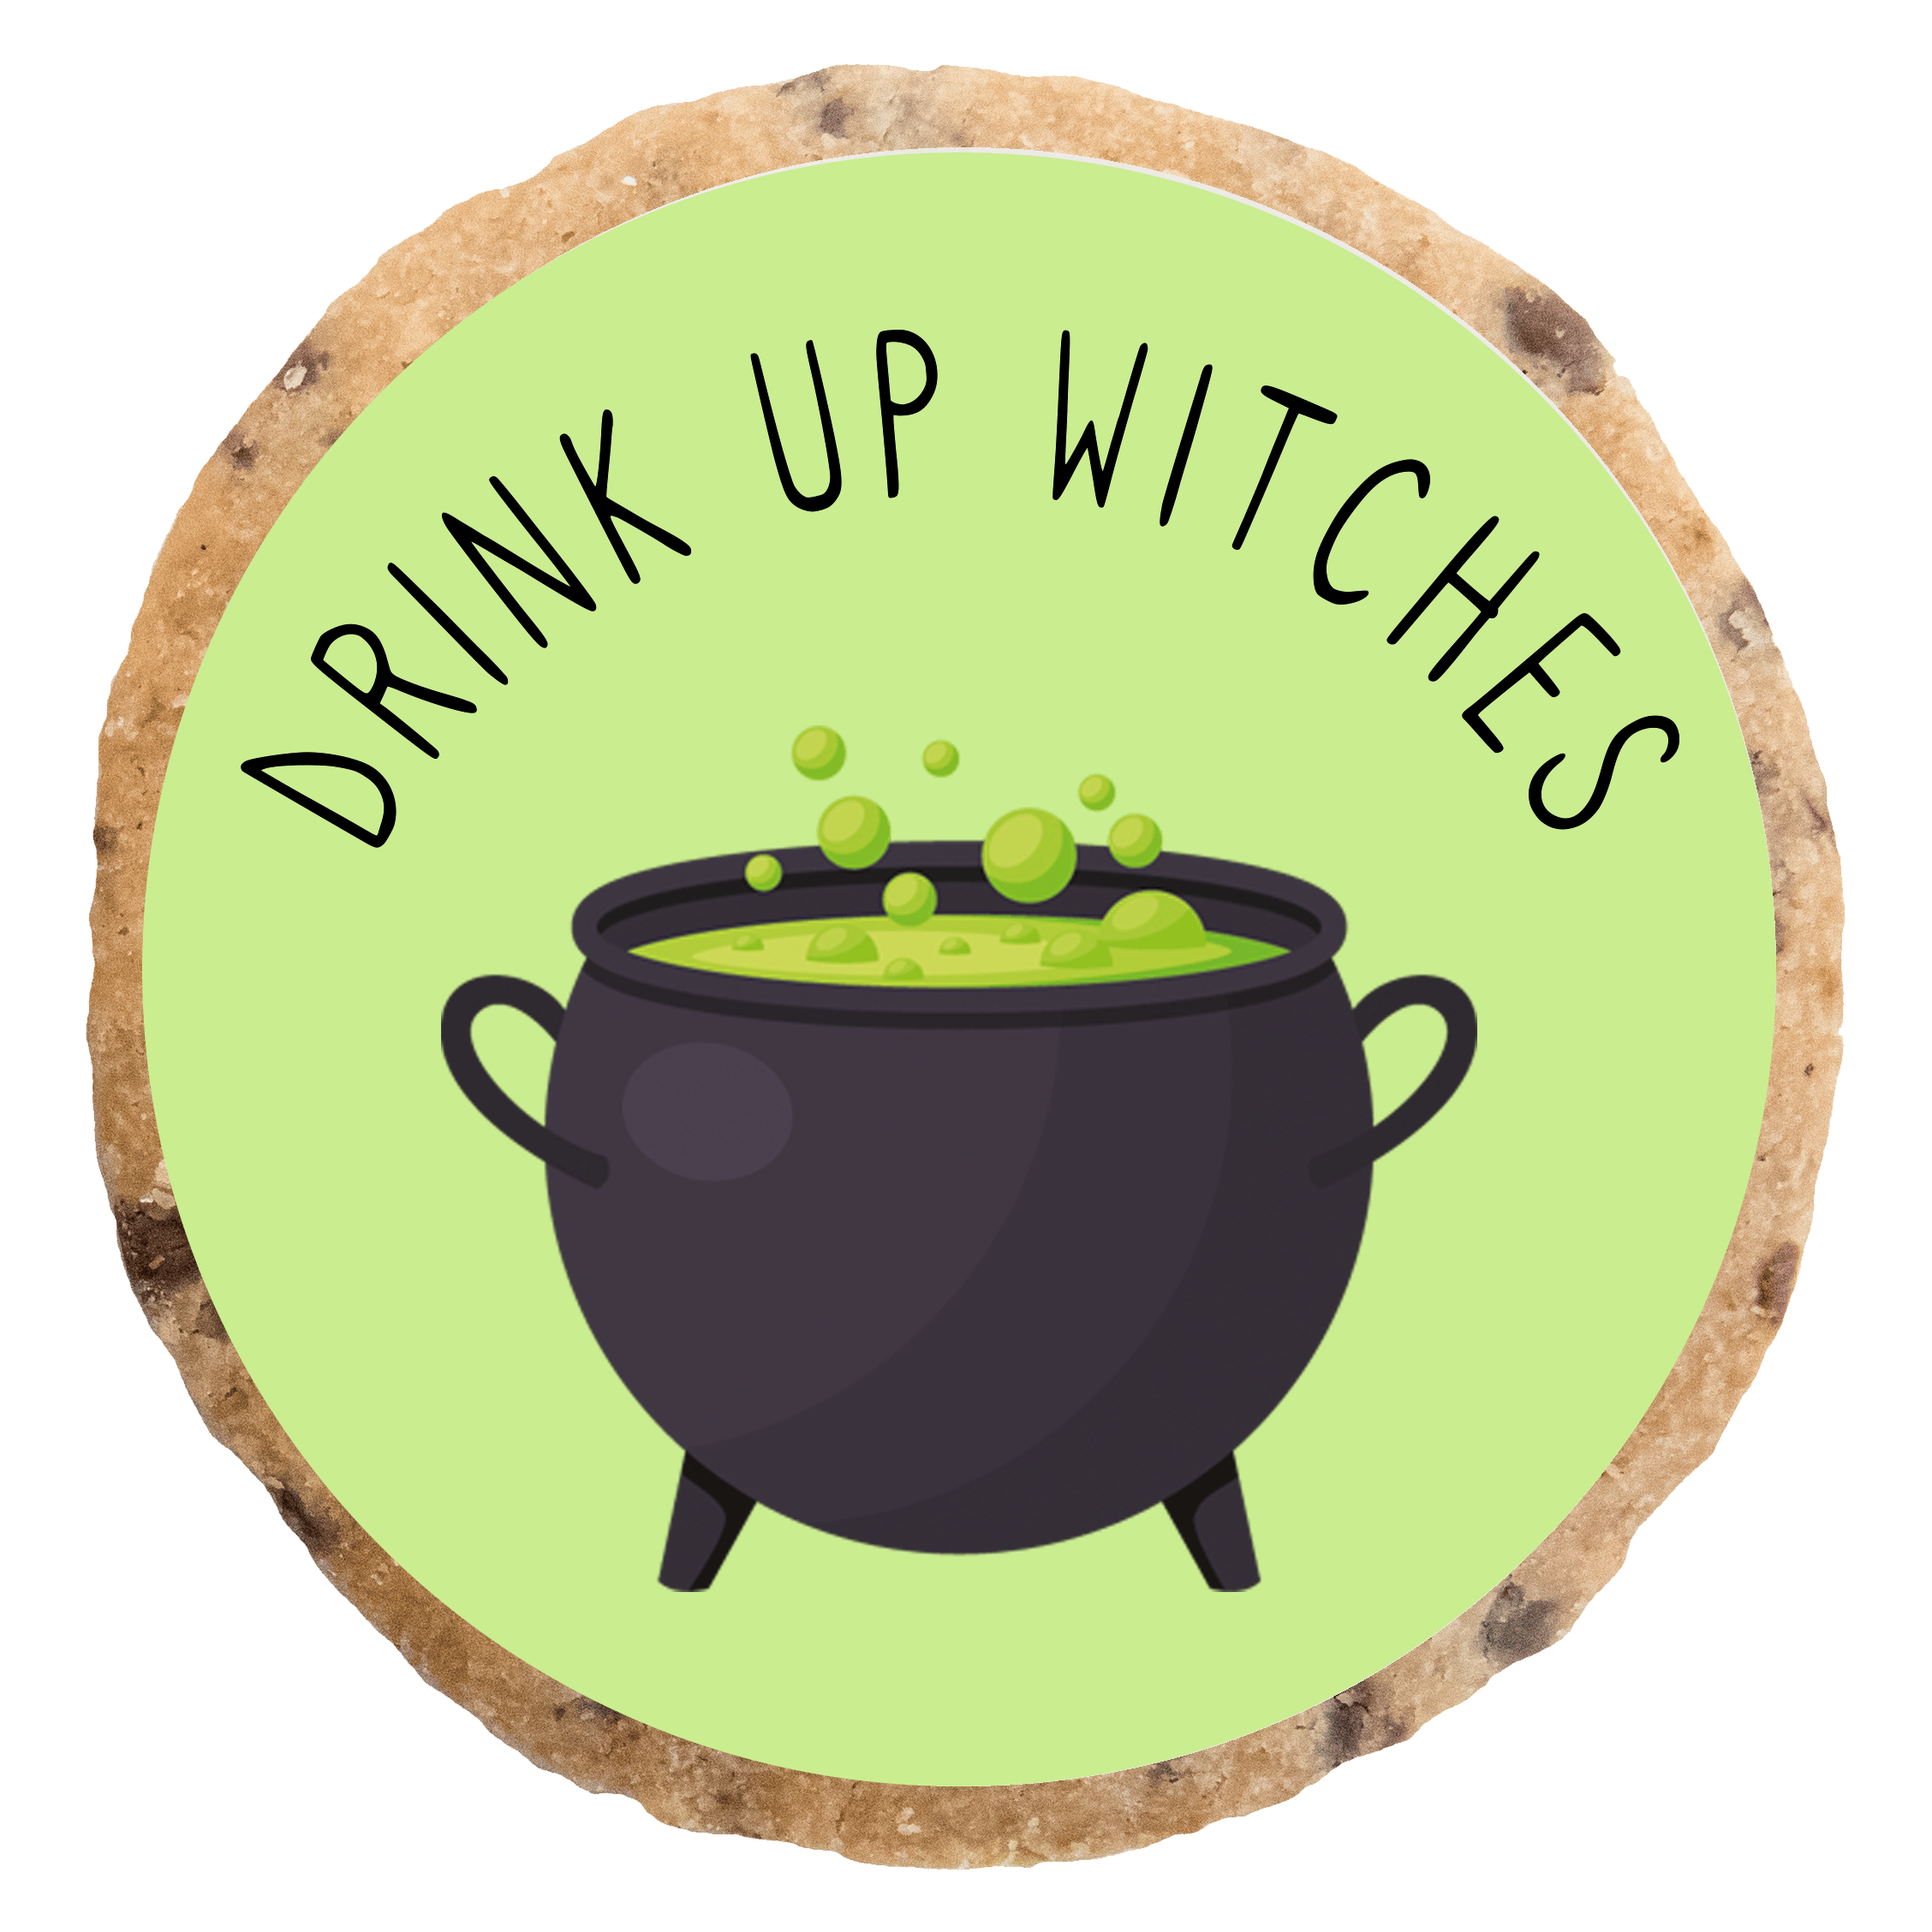 "Drink up witches" MotivKEKS